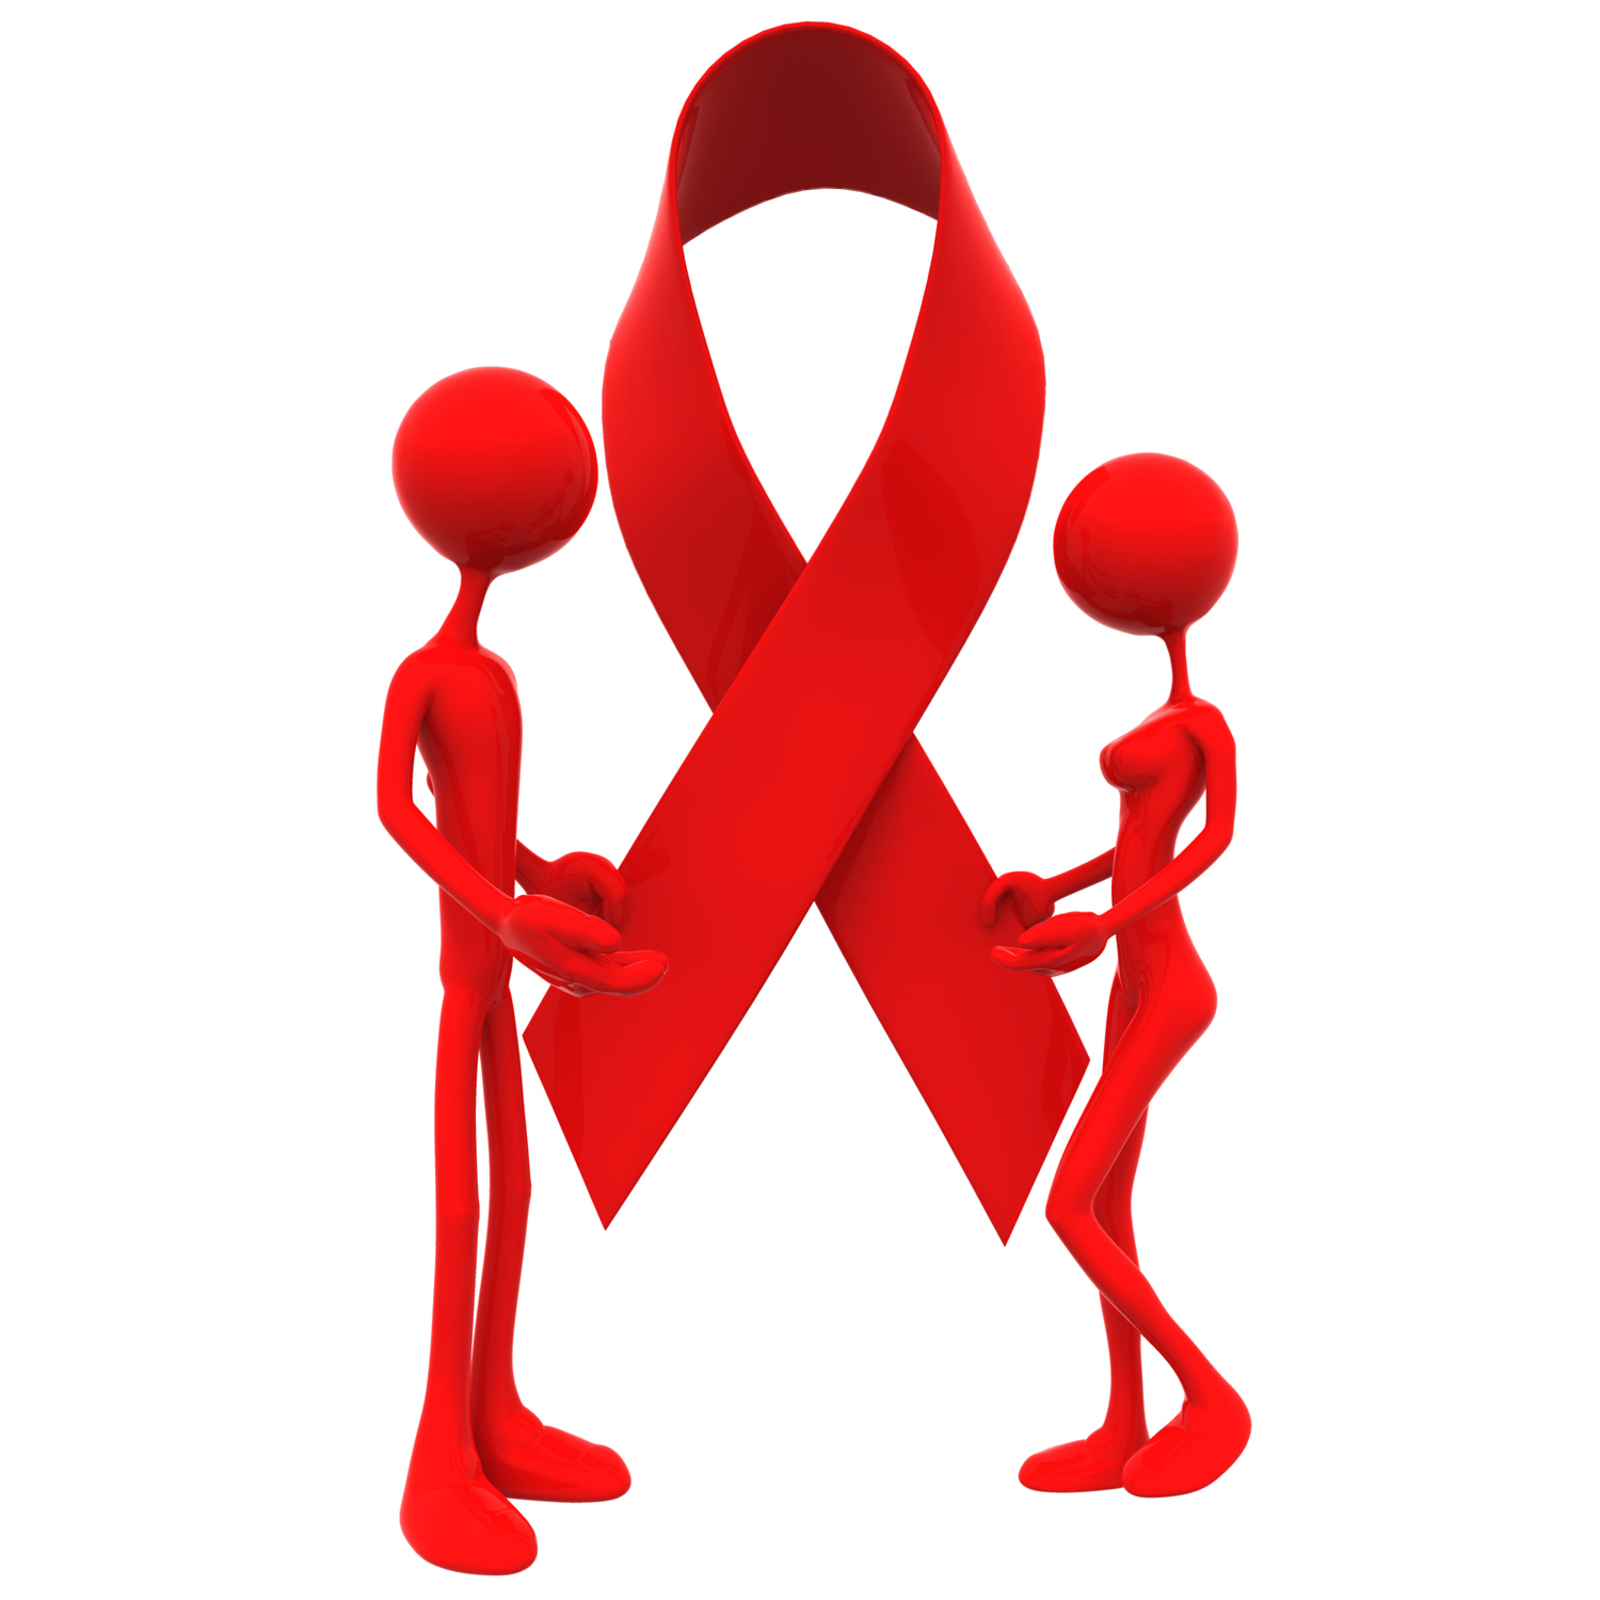 52 человека с ВИЧ - инфекцией  - такова сегодняшняя статистика по району